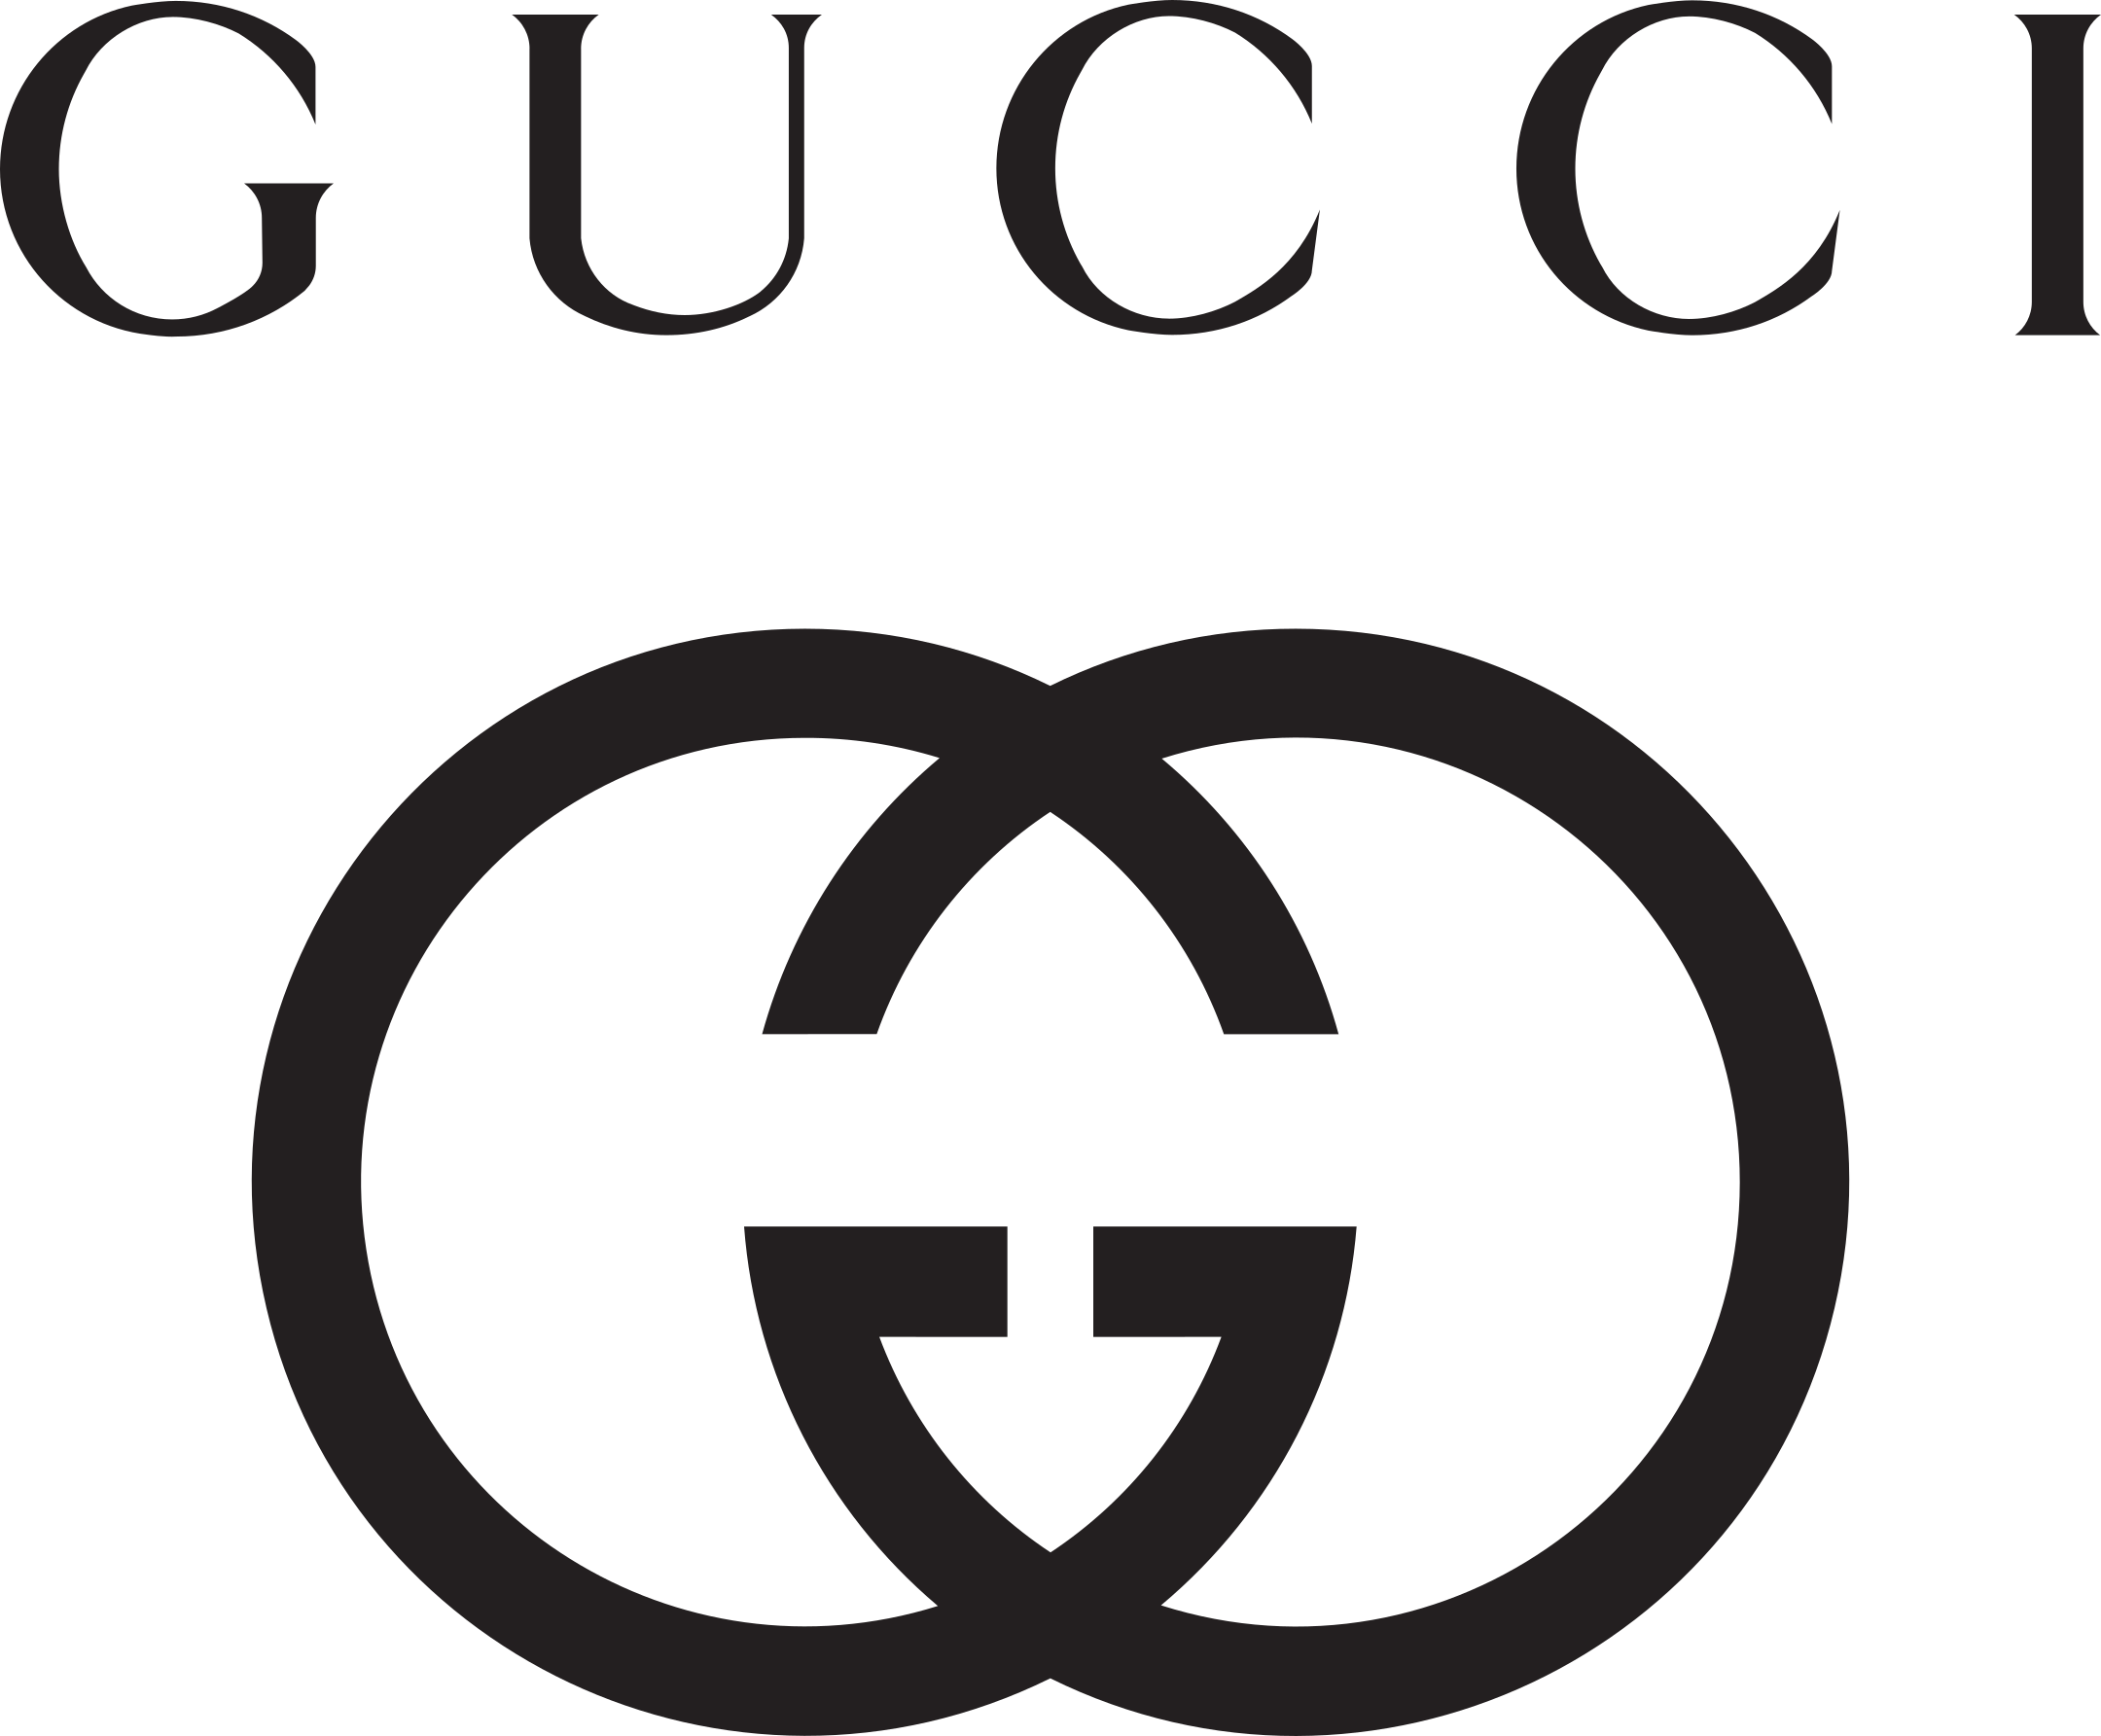 gucci logo 2 - Gucci Logo